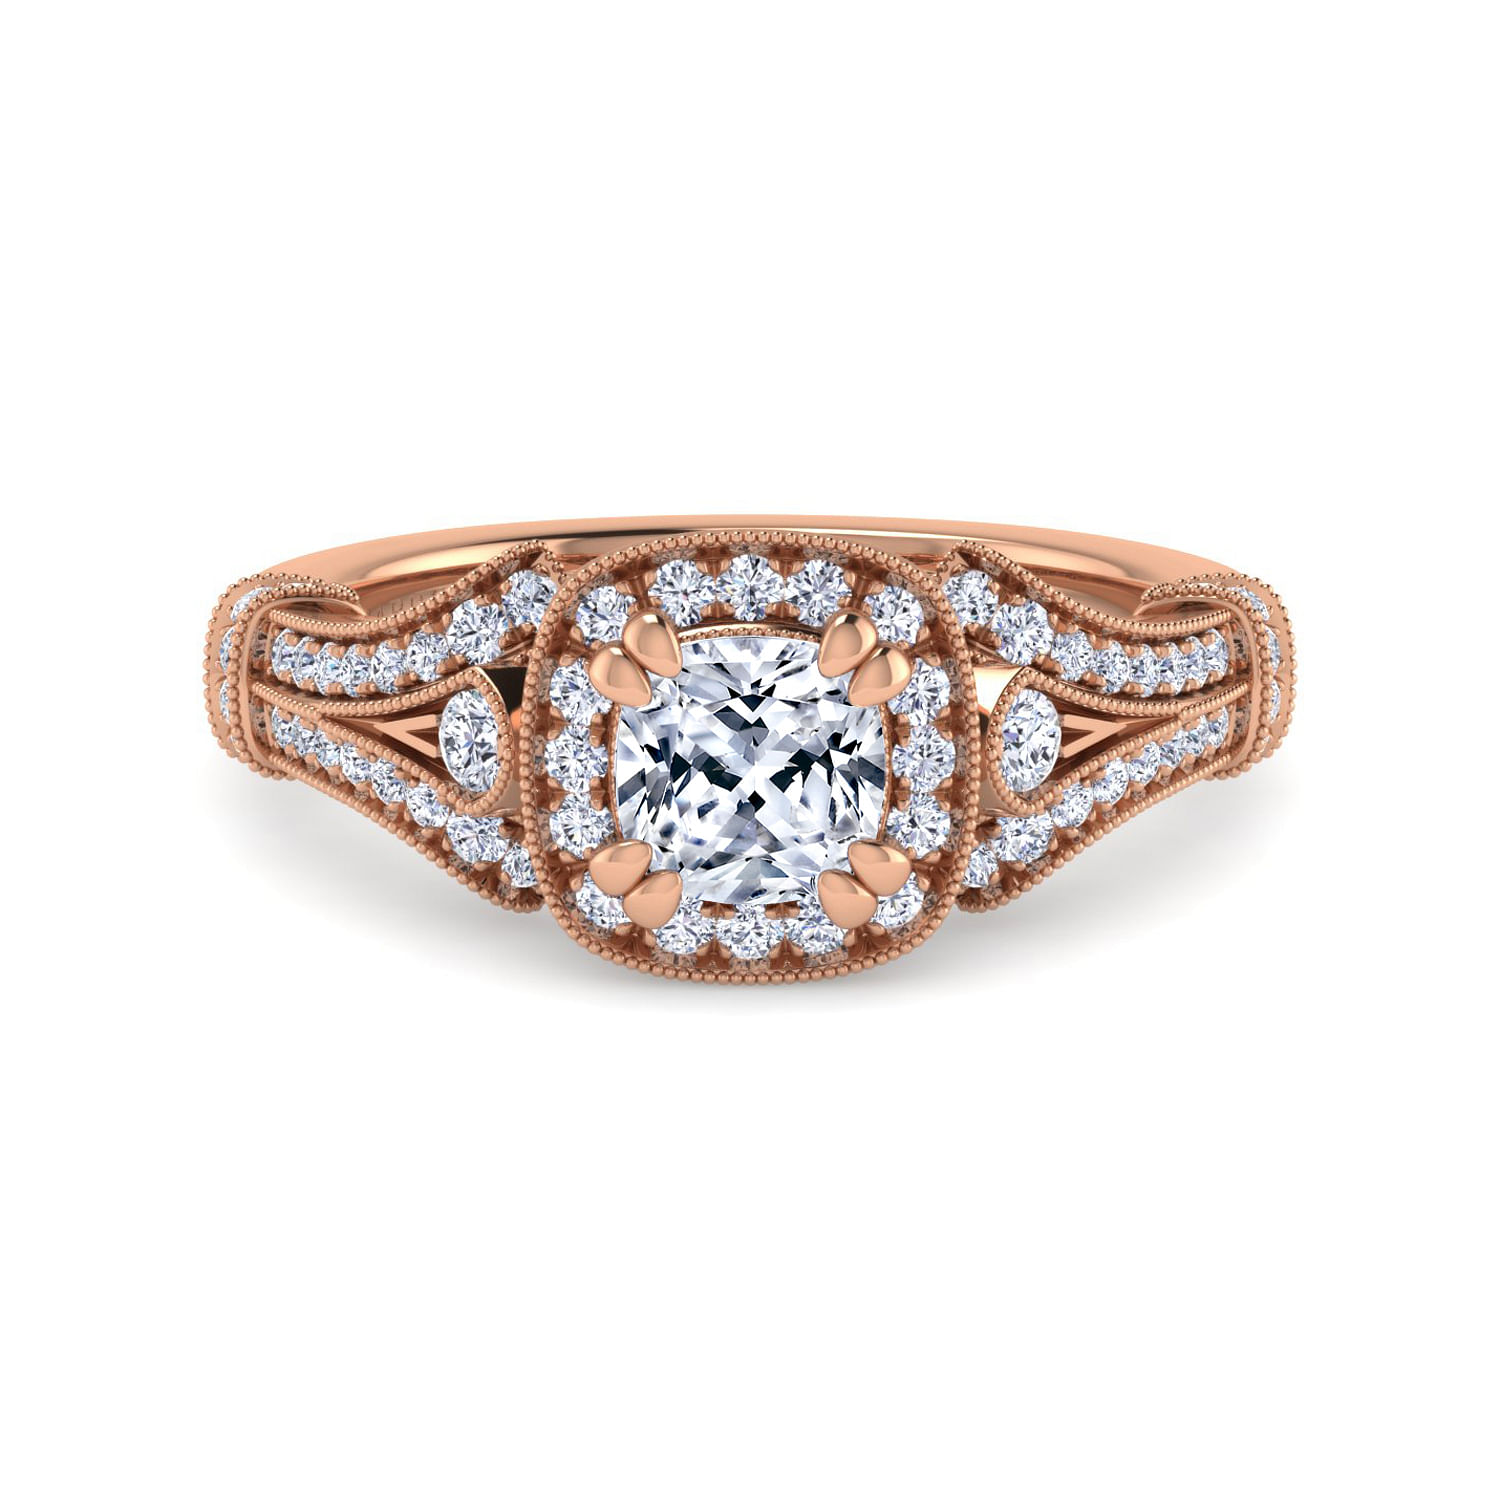 Delilah - Vintage Inspired 14K Rose Gold Cushion Halo Diamond Engagement Ring